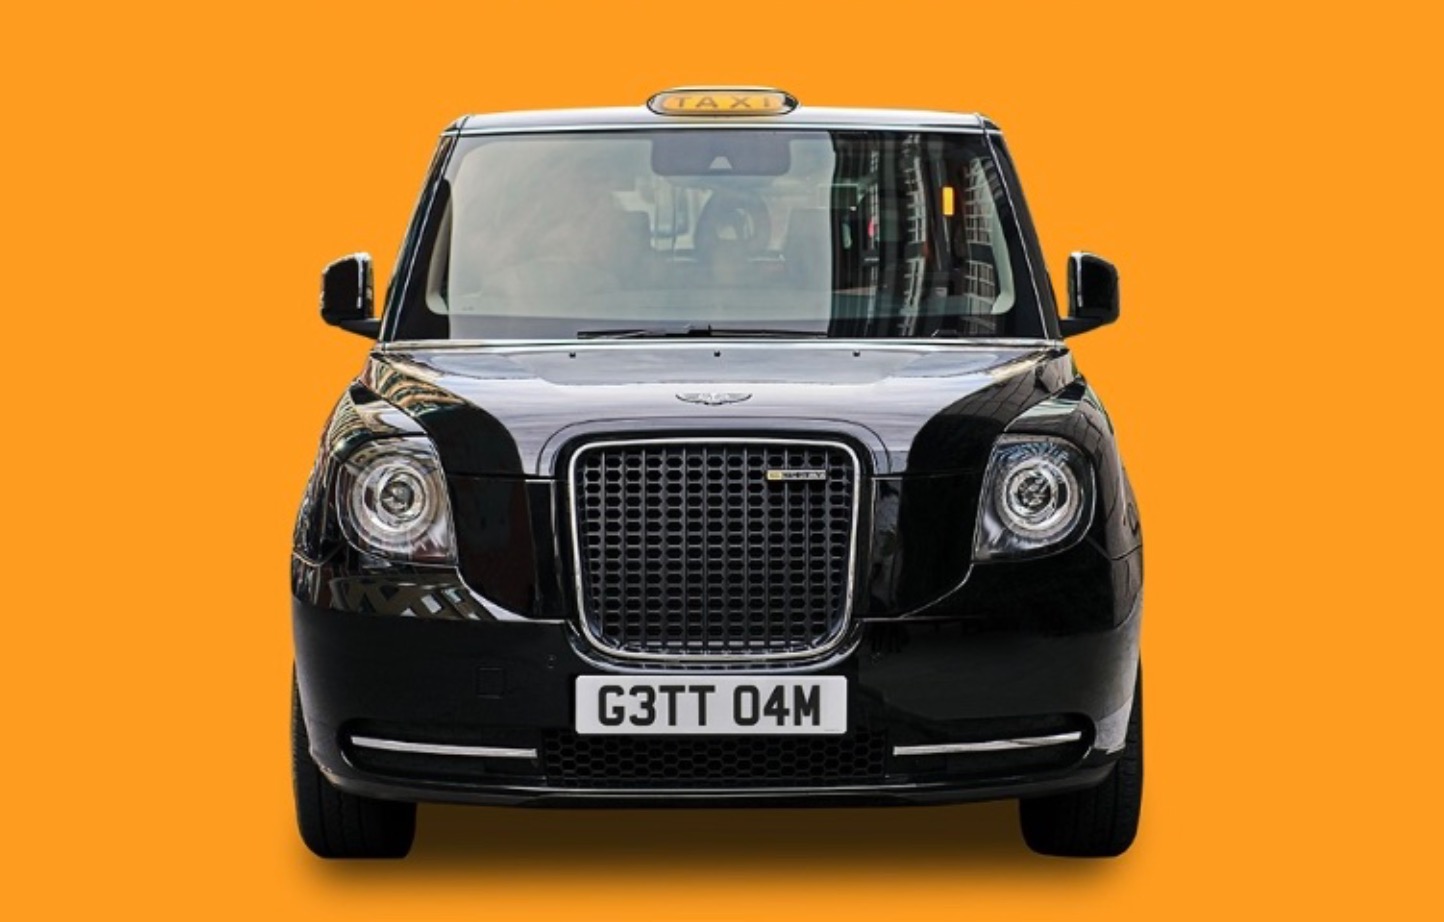 Londense Black Cab krijgt kleur in OOH